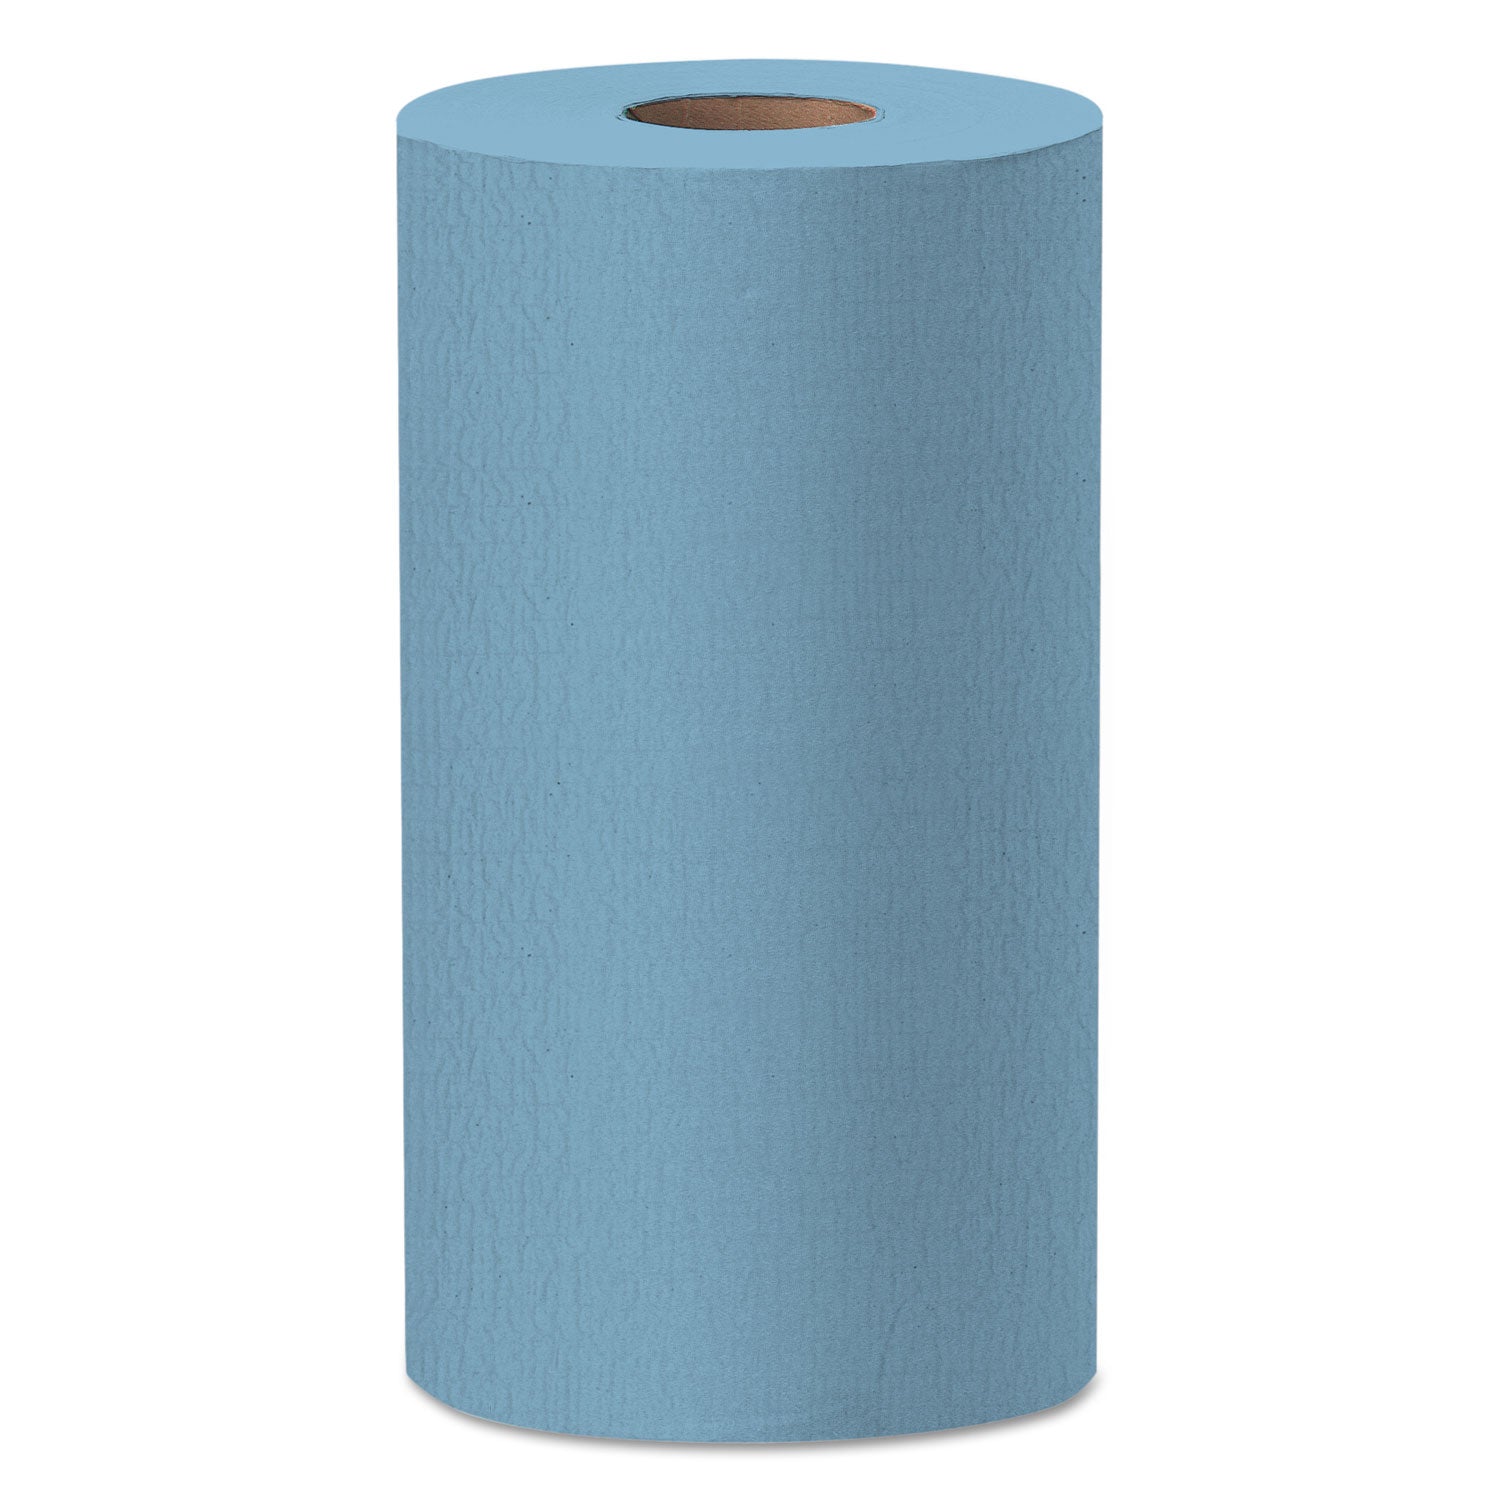 general-clean-x60-cloths-small-roll-135-x-196-blue-130-roll-6-rolls-carton_kcc35431 - 1